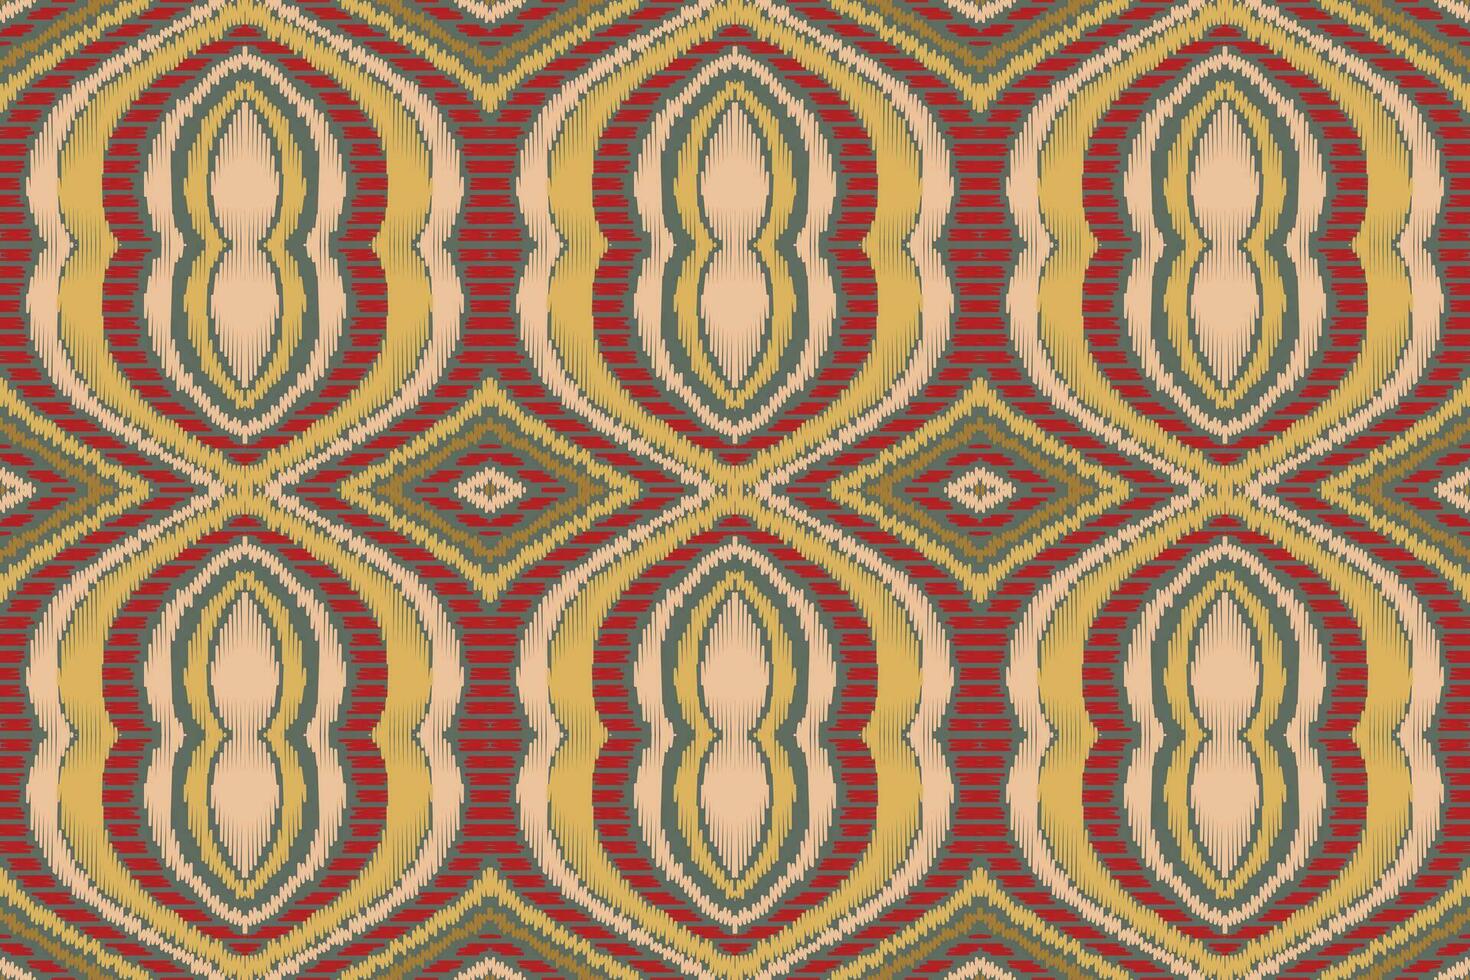 ikat damasco cachemir bordado antecedentes. ikat sin costura modelo geométrico étnico oriental modelo tradicional. ikat azteca estilo resumen diseño para impresión textura,tela,sari,sari,alfombra. vector